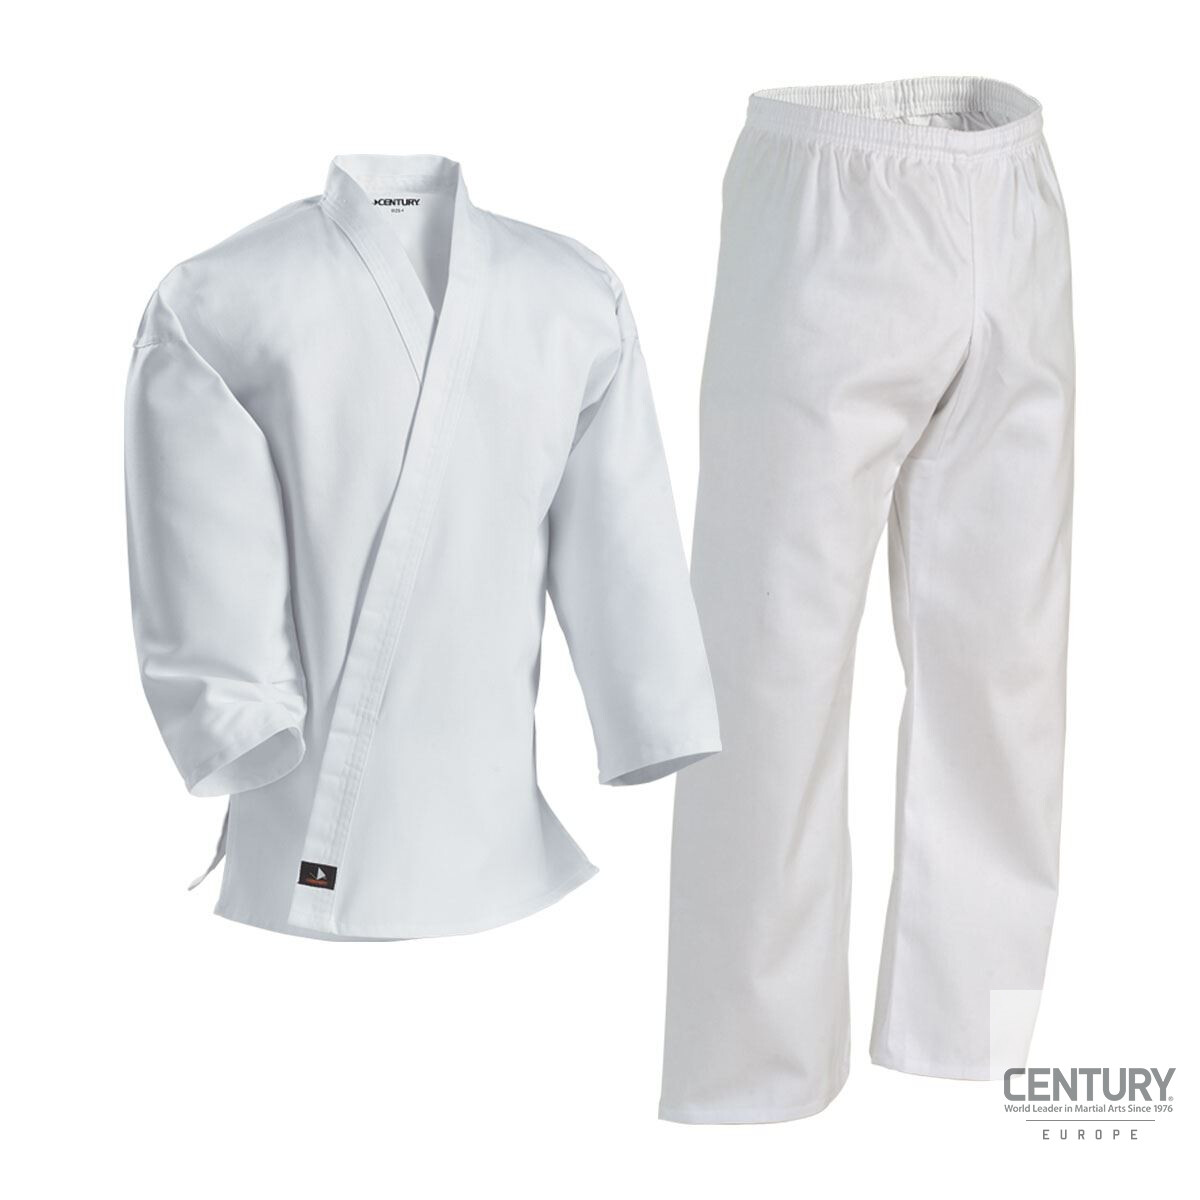 LW Student Uniform 6 oz Weiß [4] 168 - 180 cm